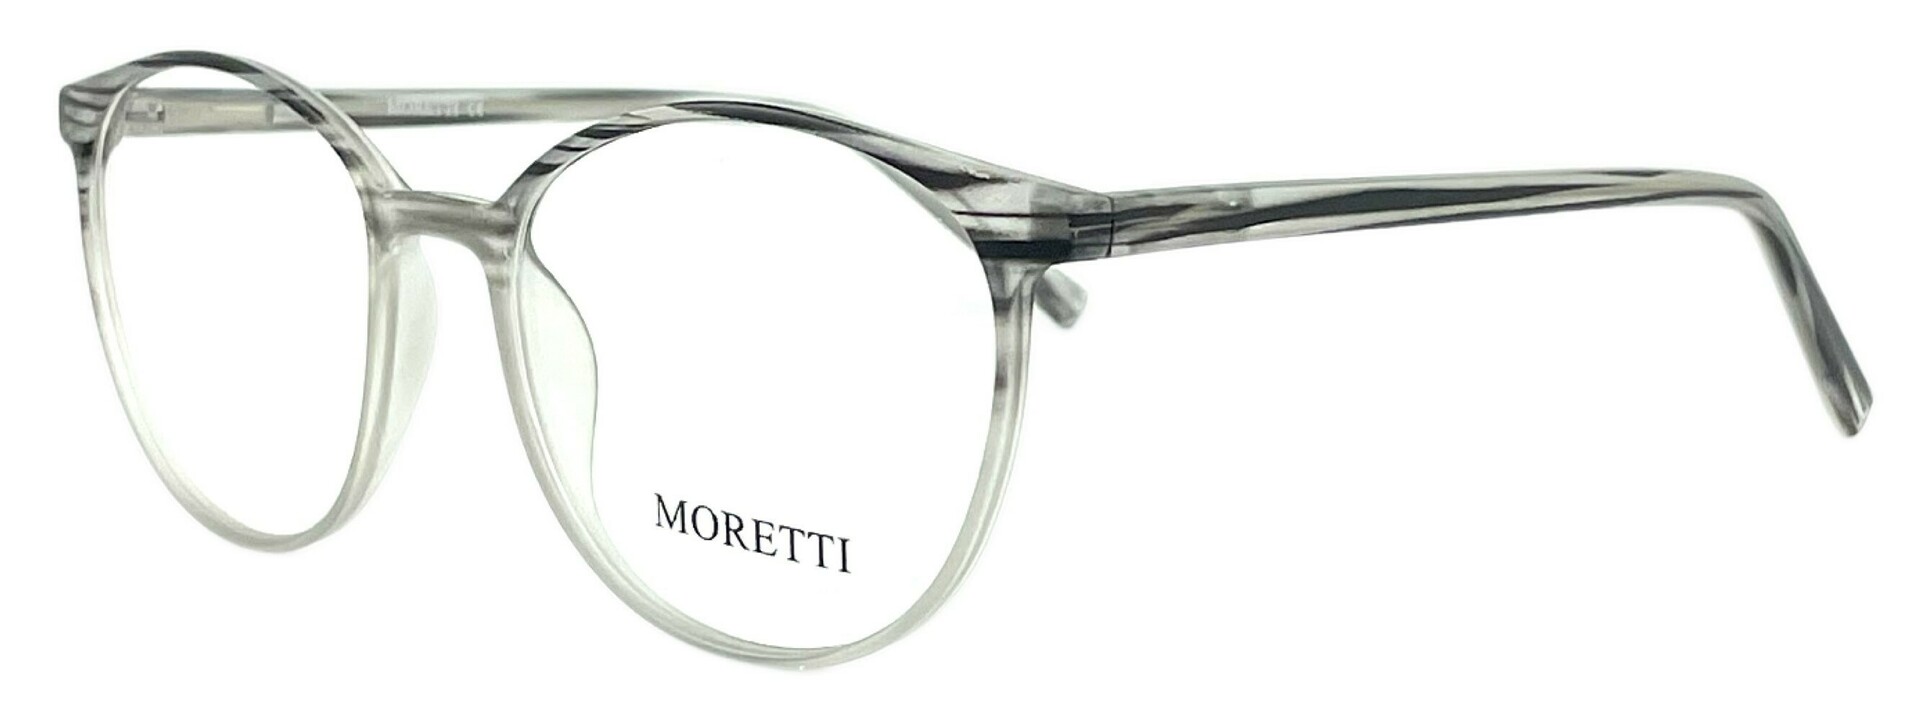 Moretti 2023009 C2 2